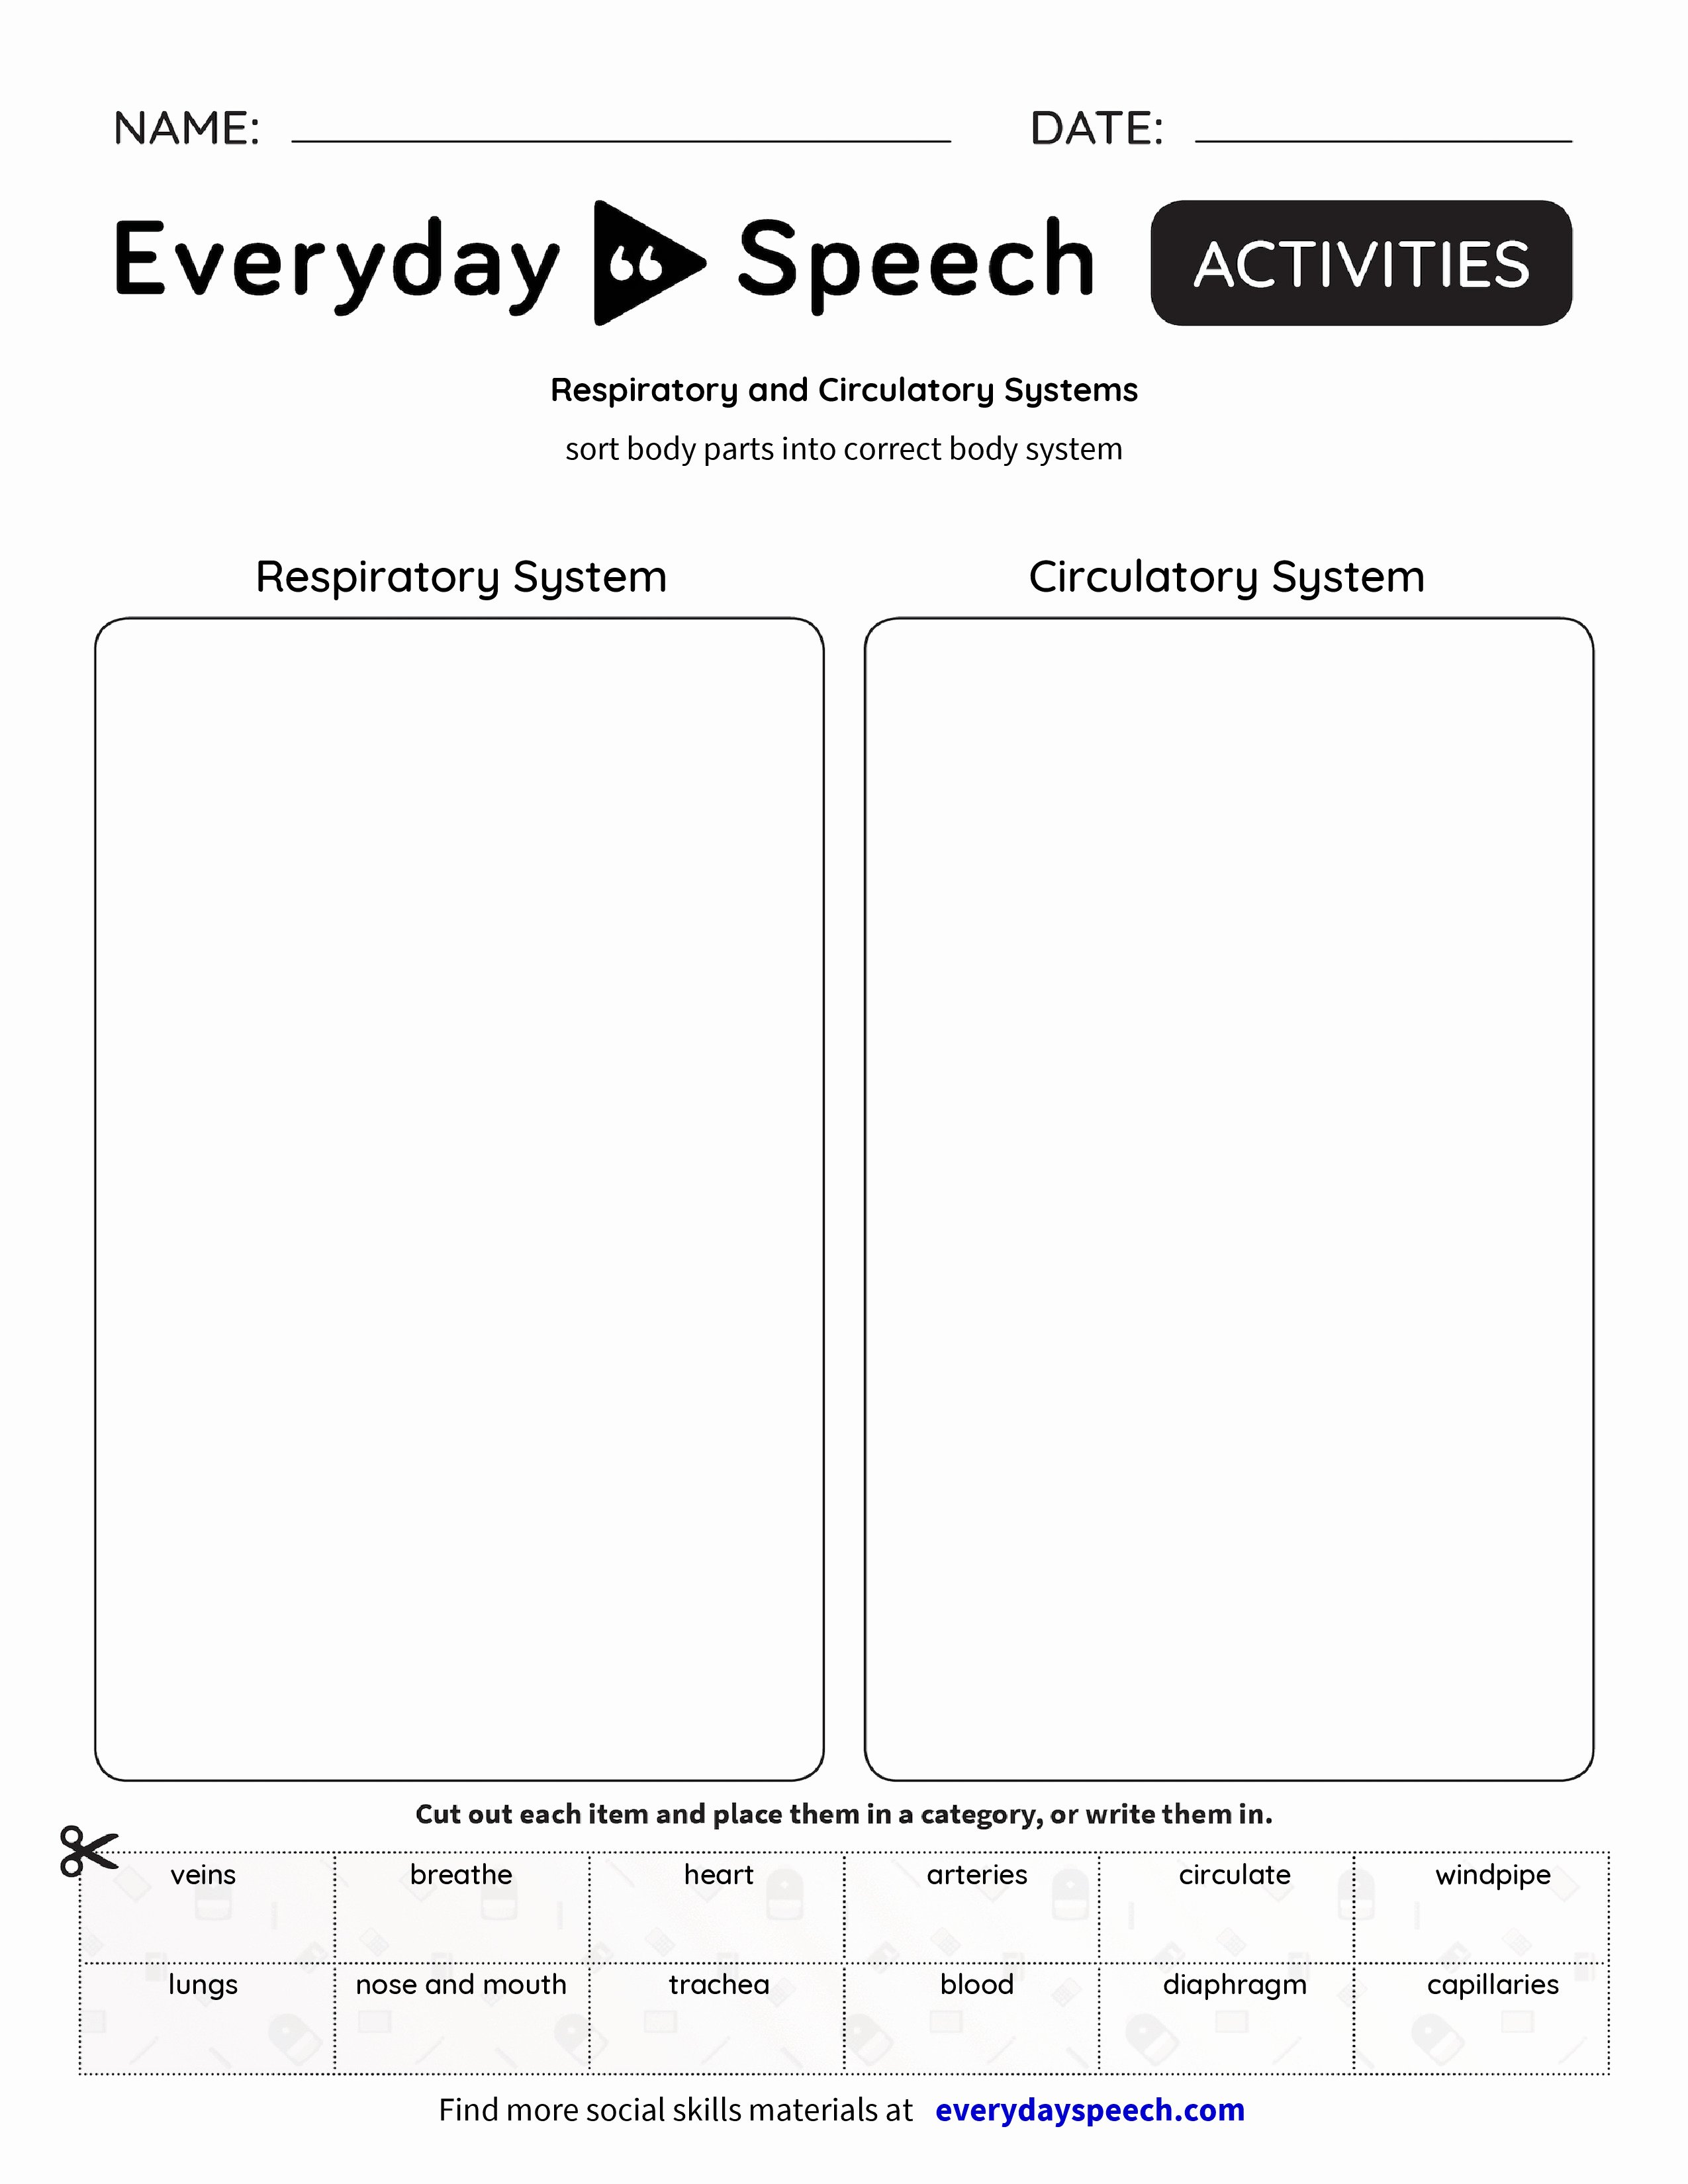 Circulatory System Worksheet Pdf Inspirational Respiratory and Circulatory Systems Everyday Speech